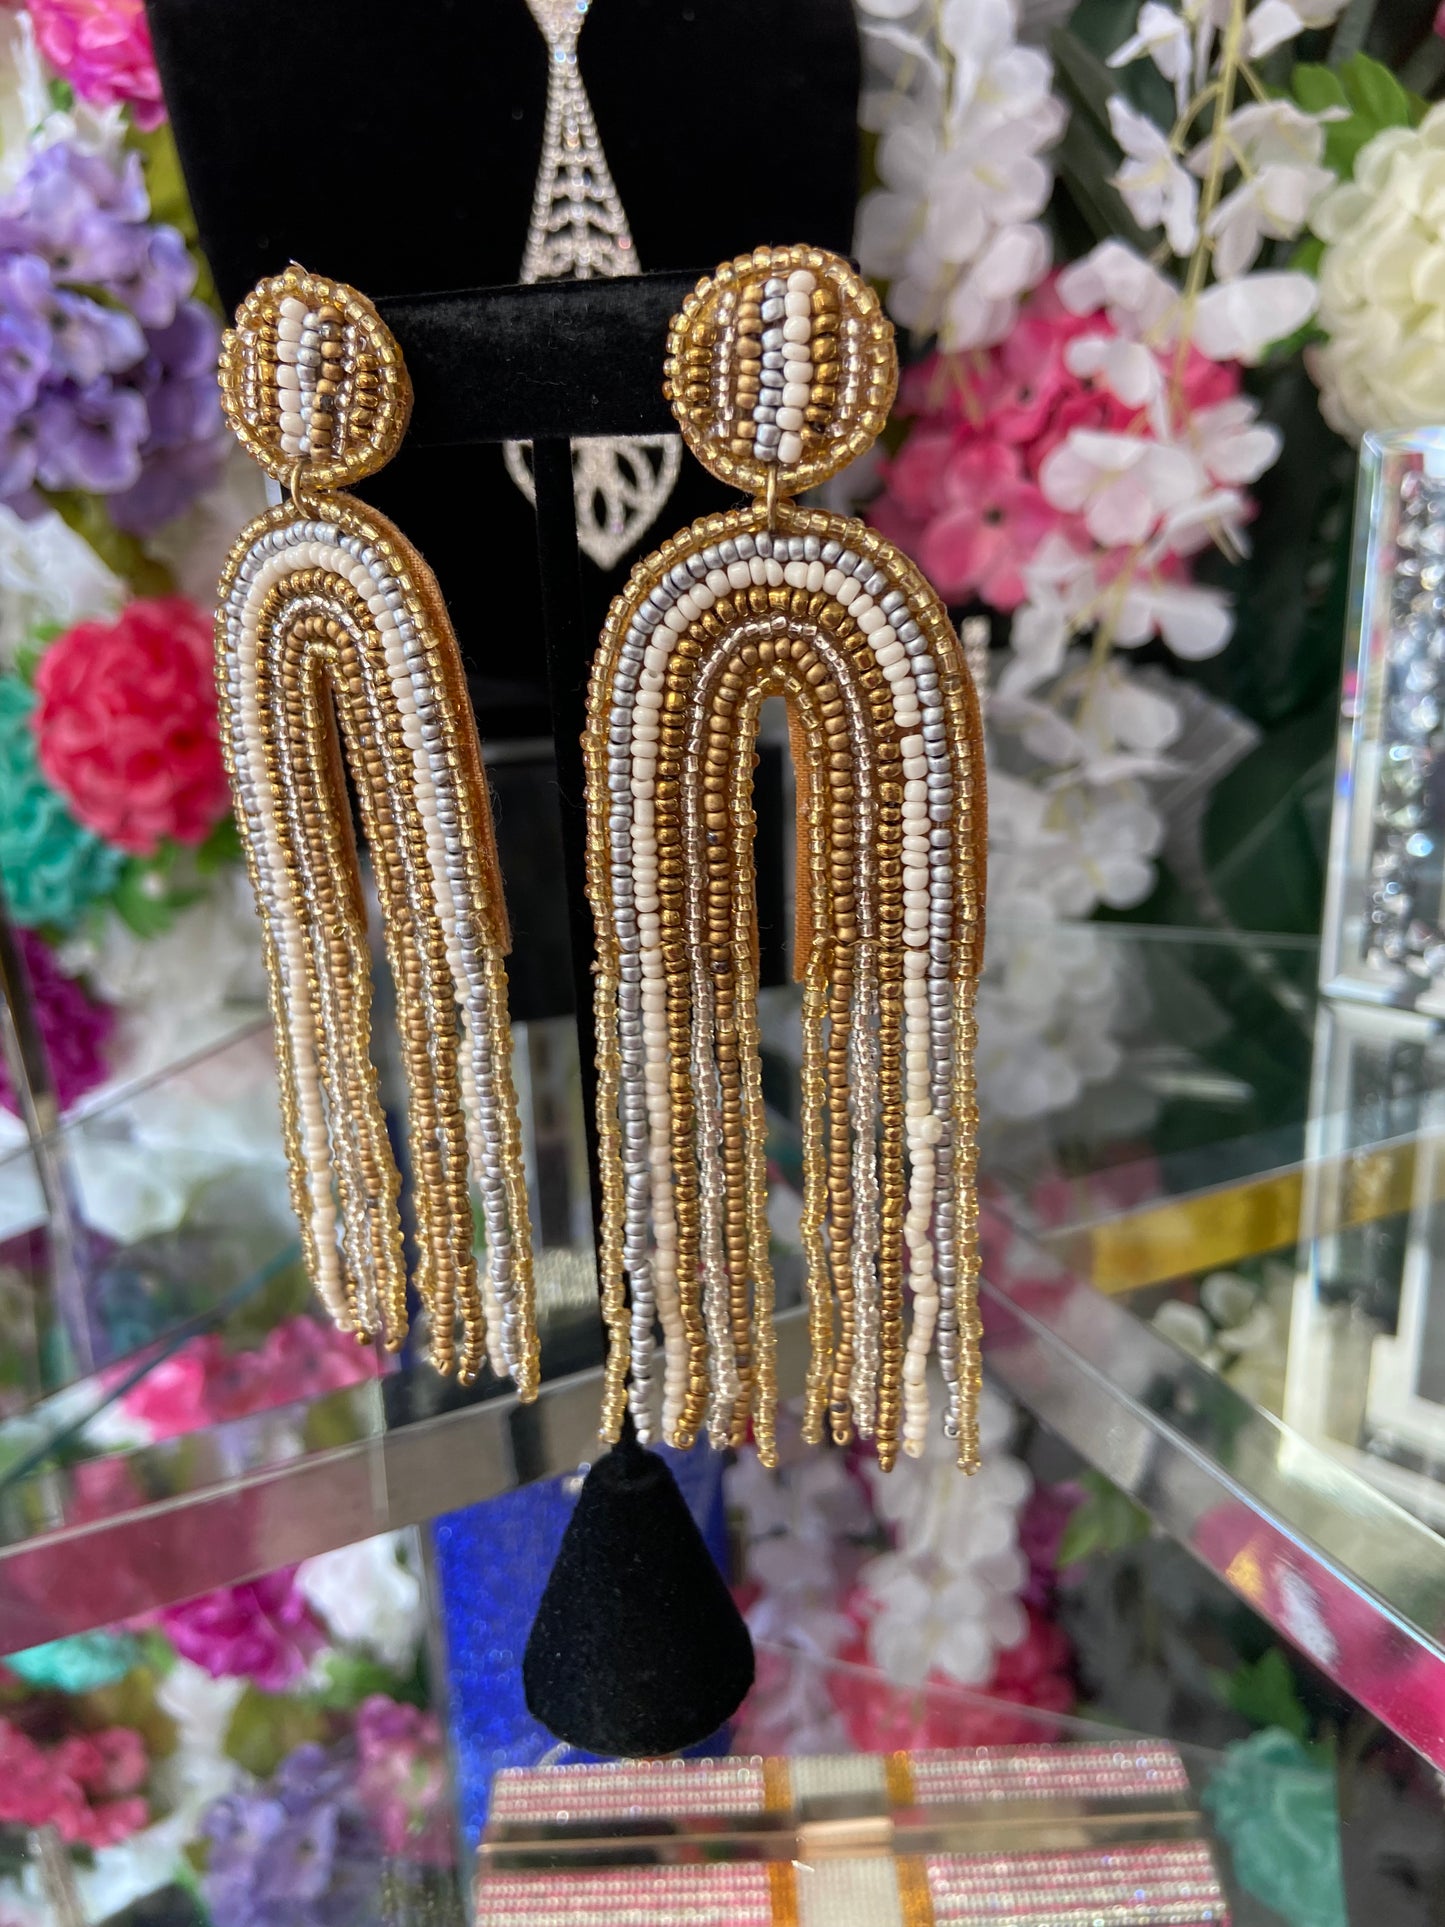 The Raining Beads Earrings